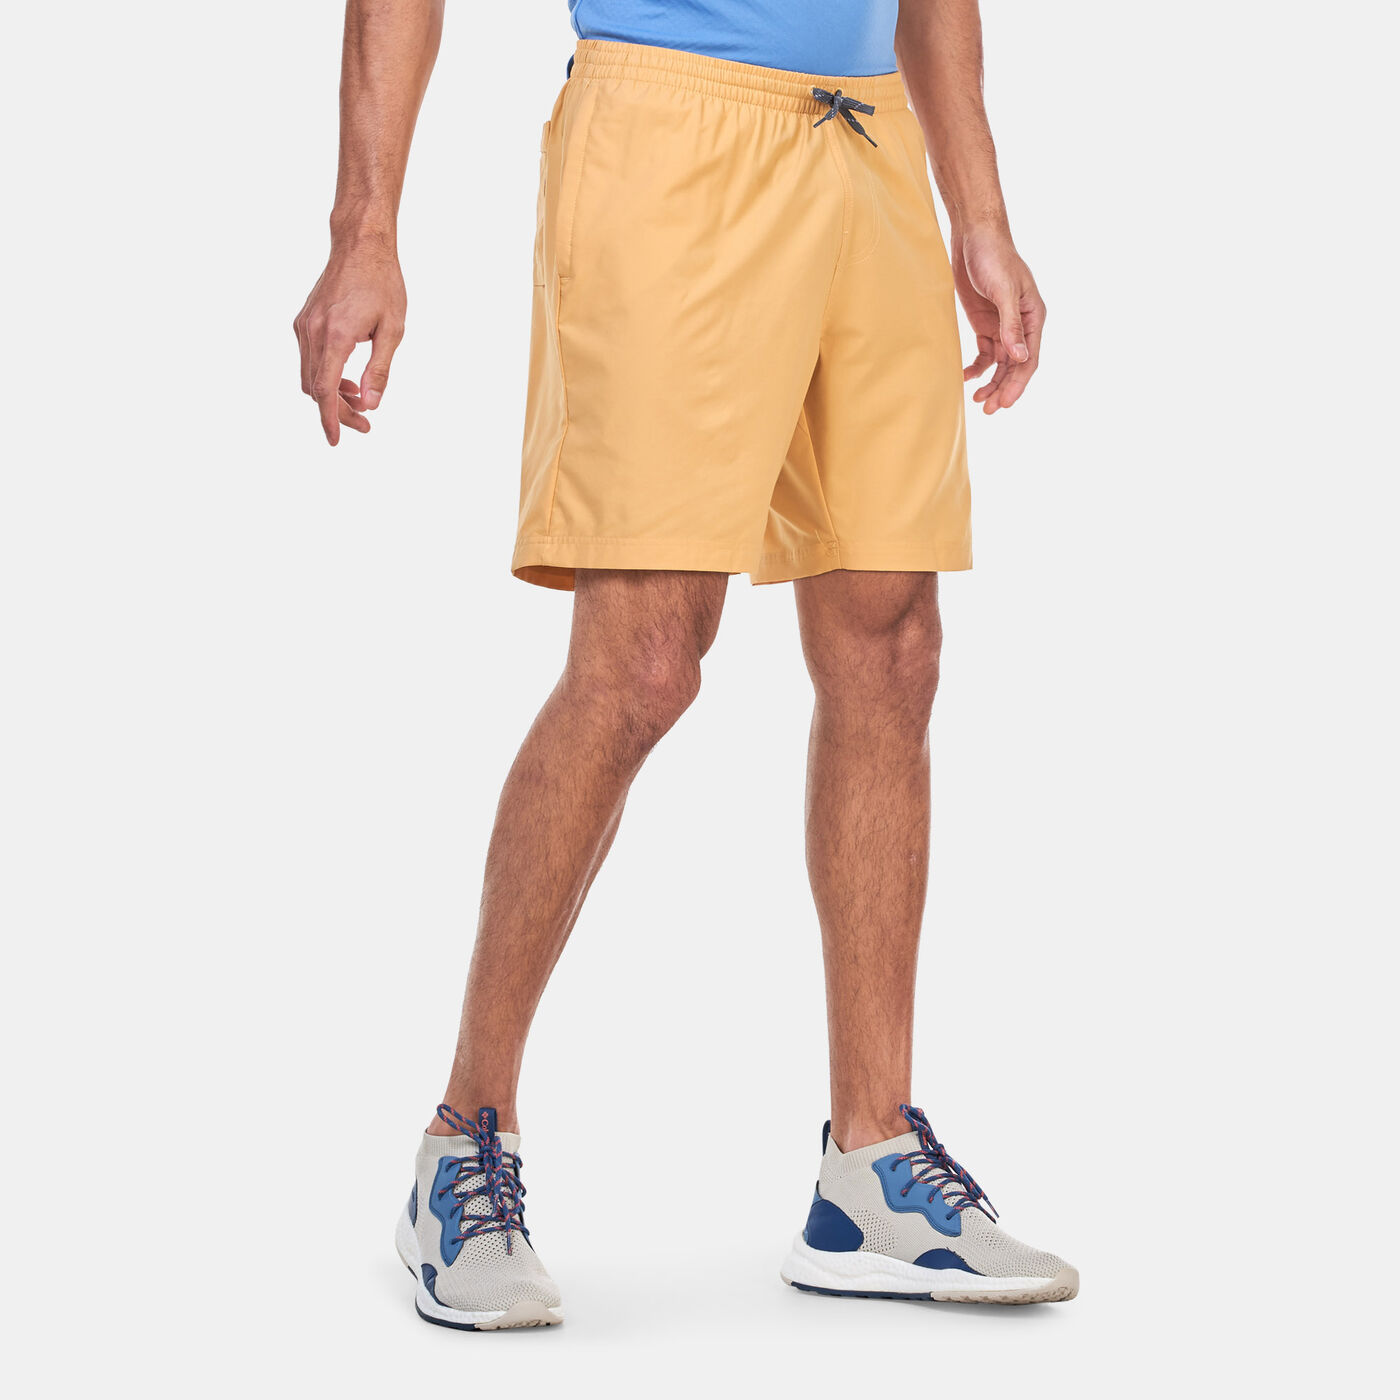 Men's Summertide Stretch Shorts